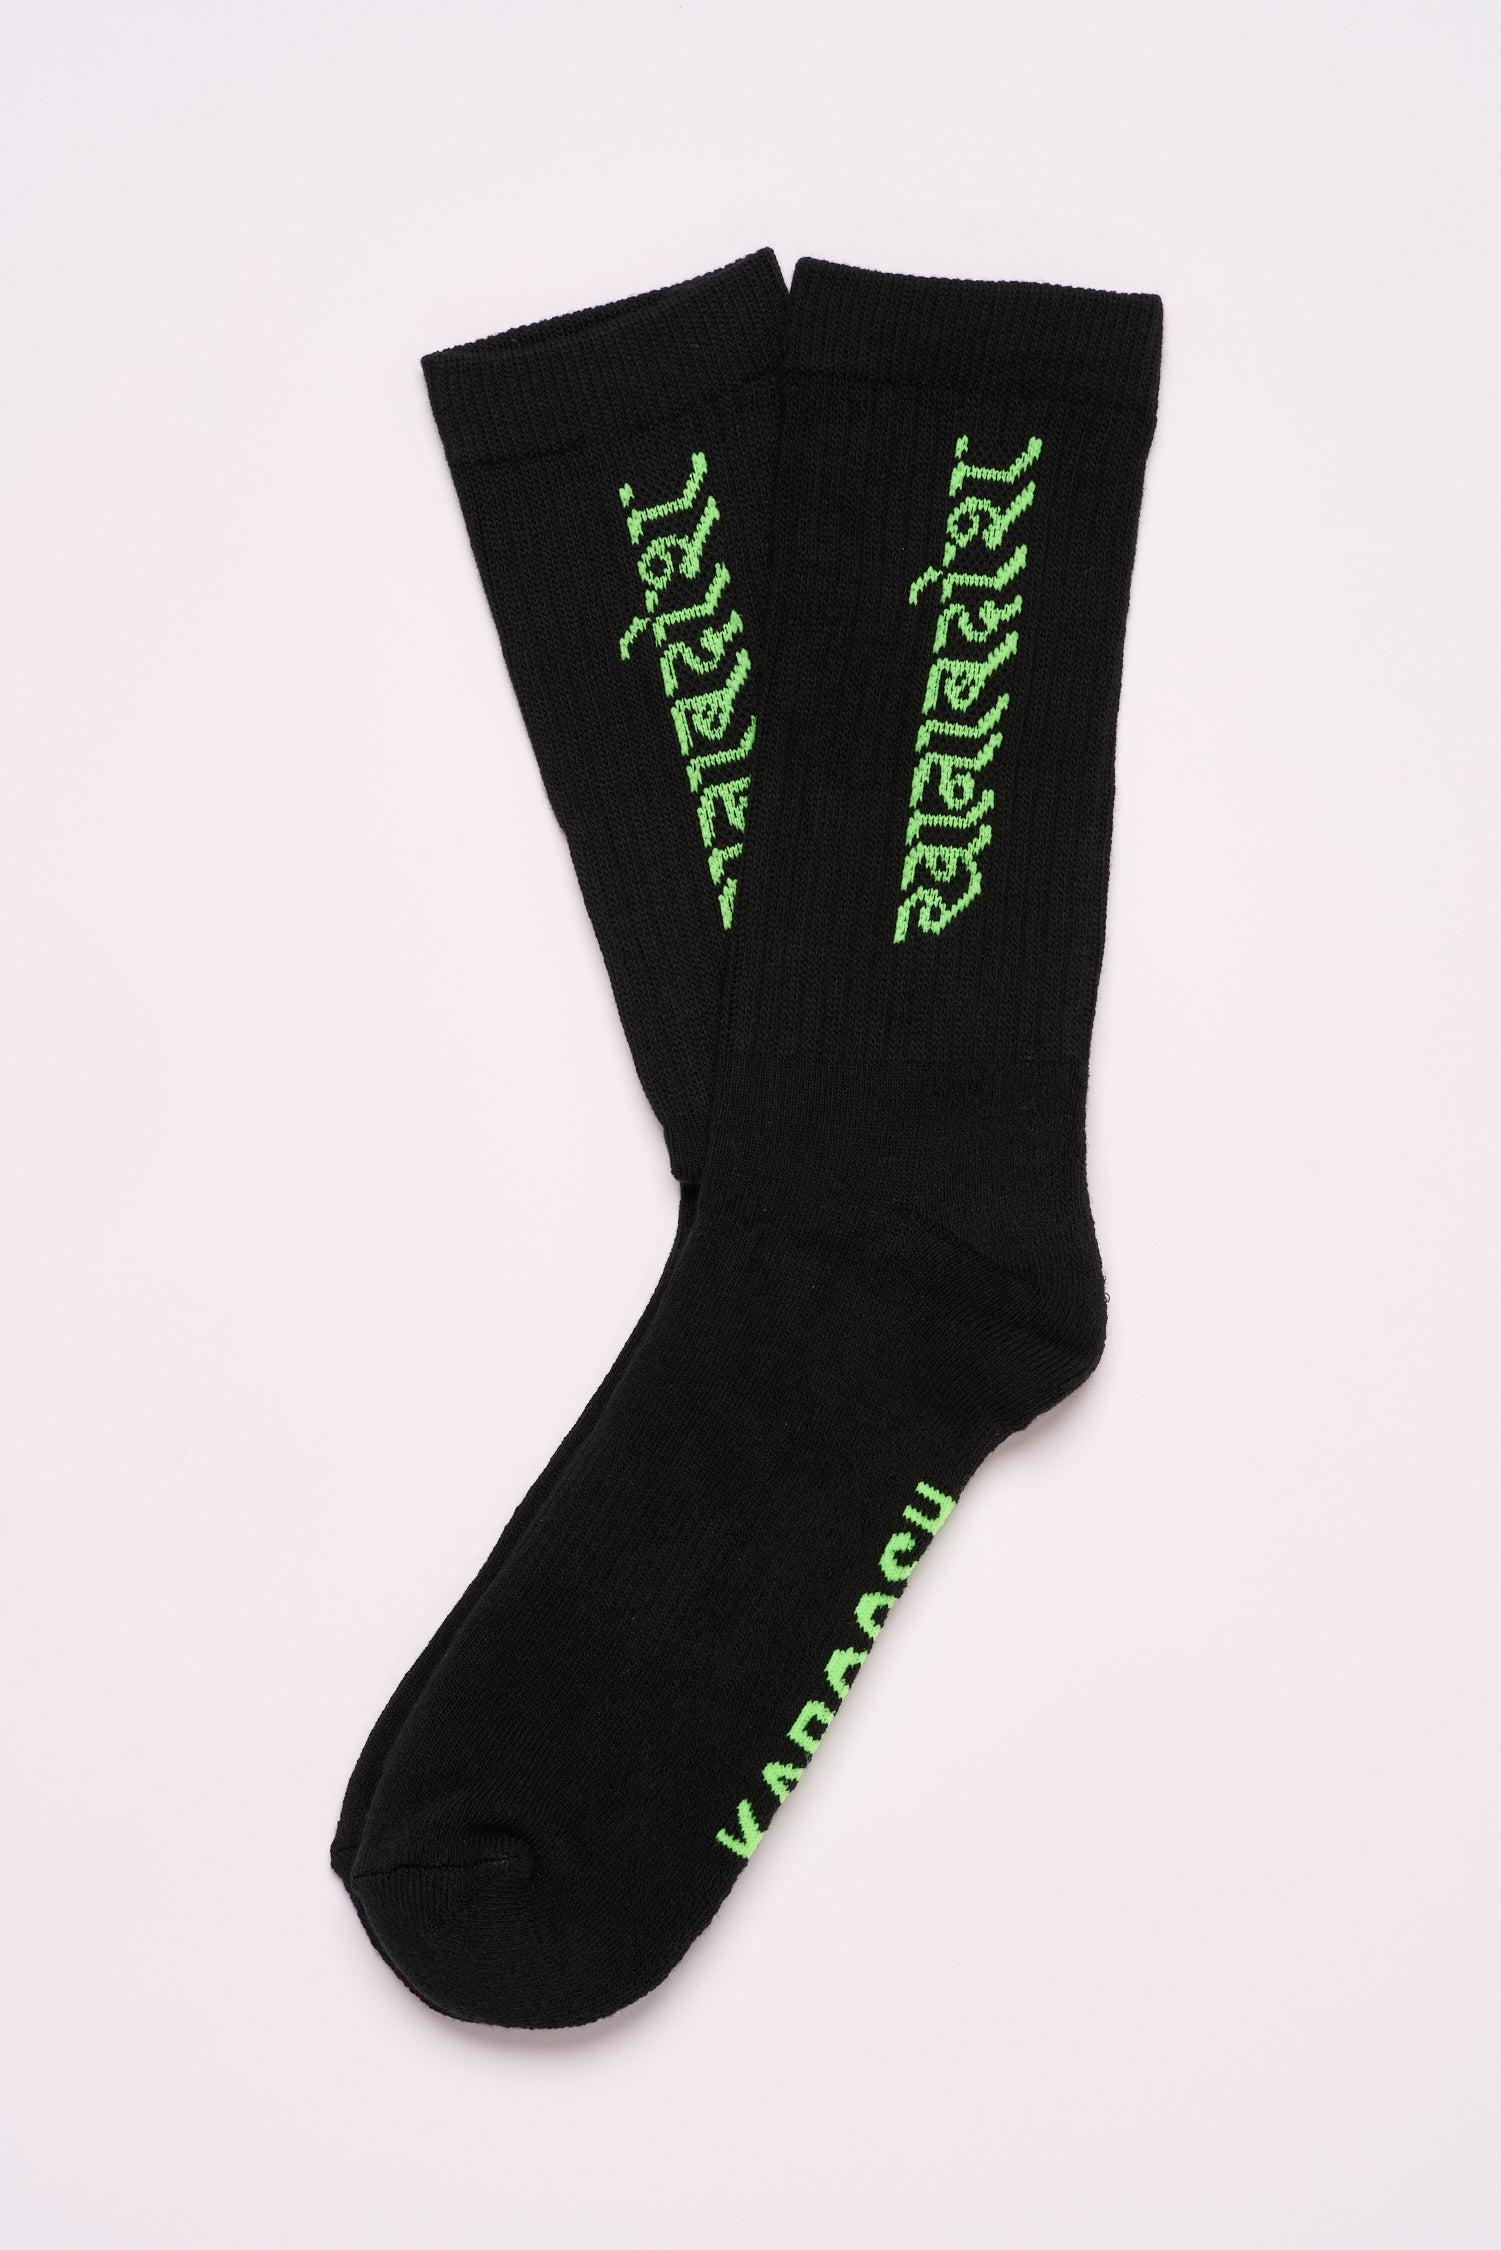 Socks - Hindi - Black and neon green - one size - Unisex